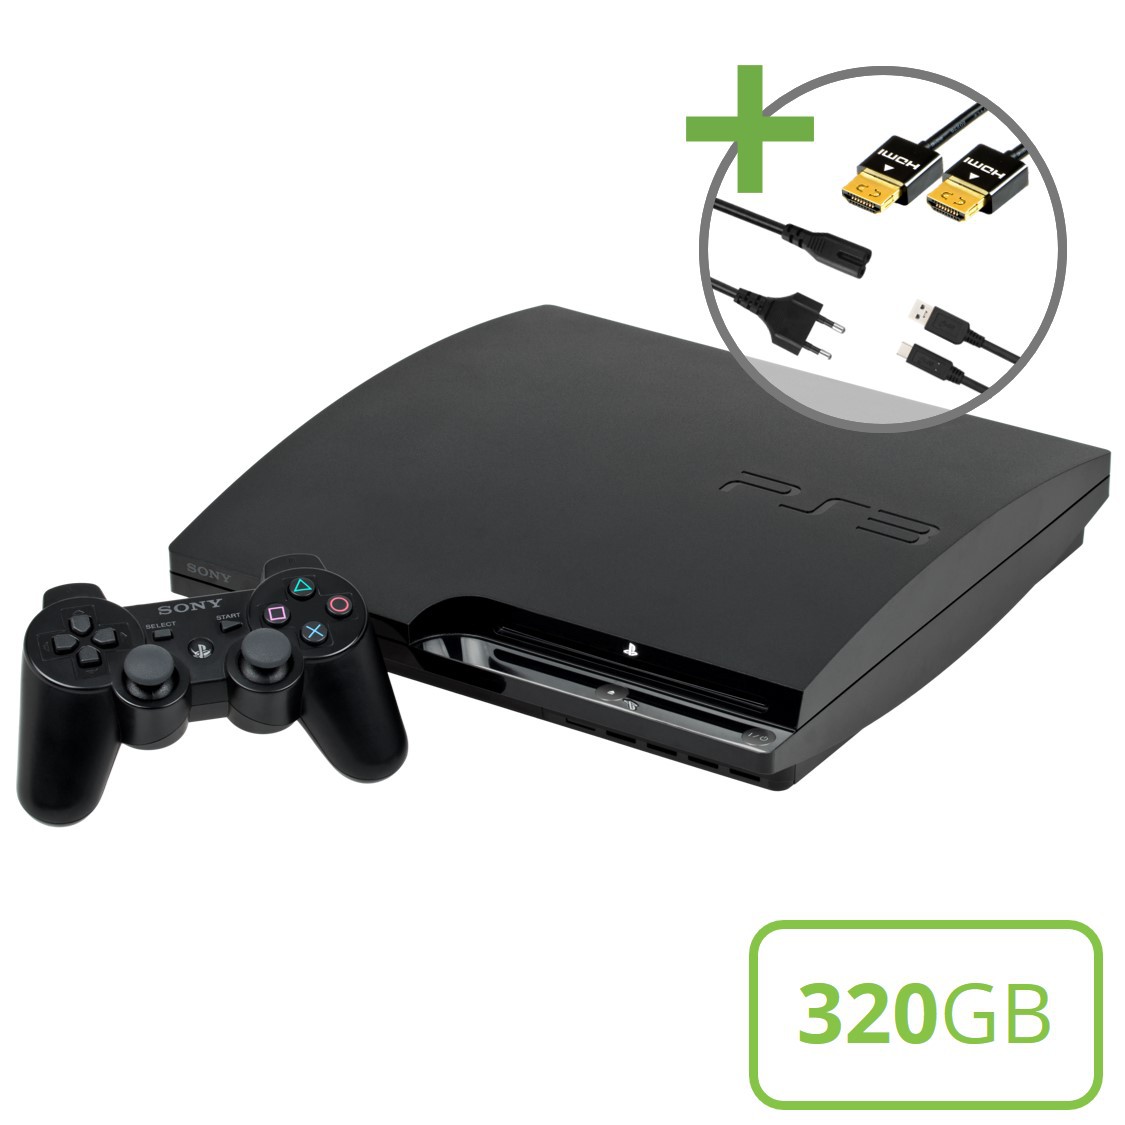 Sony PlayStation 3 Slim (320GB) Starter Pack - DualShock Edition Kopen | Playstation 3 Hardware